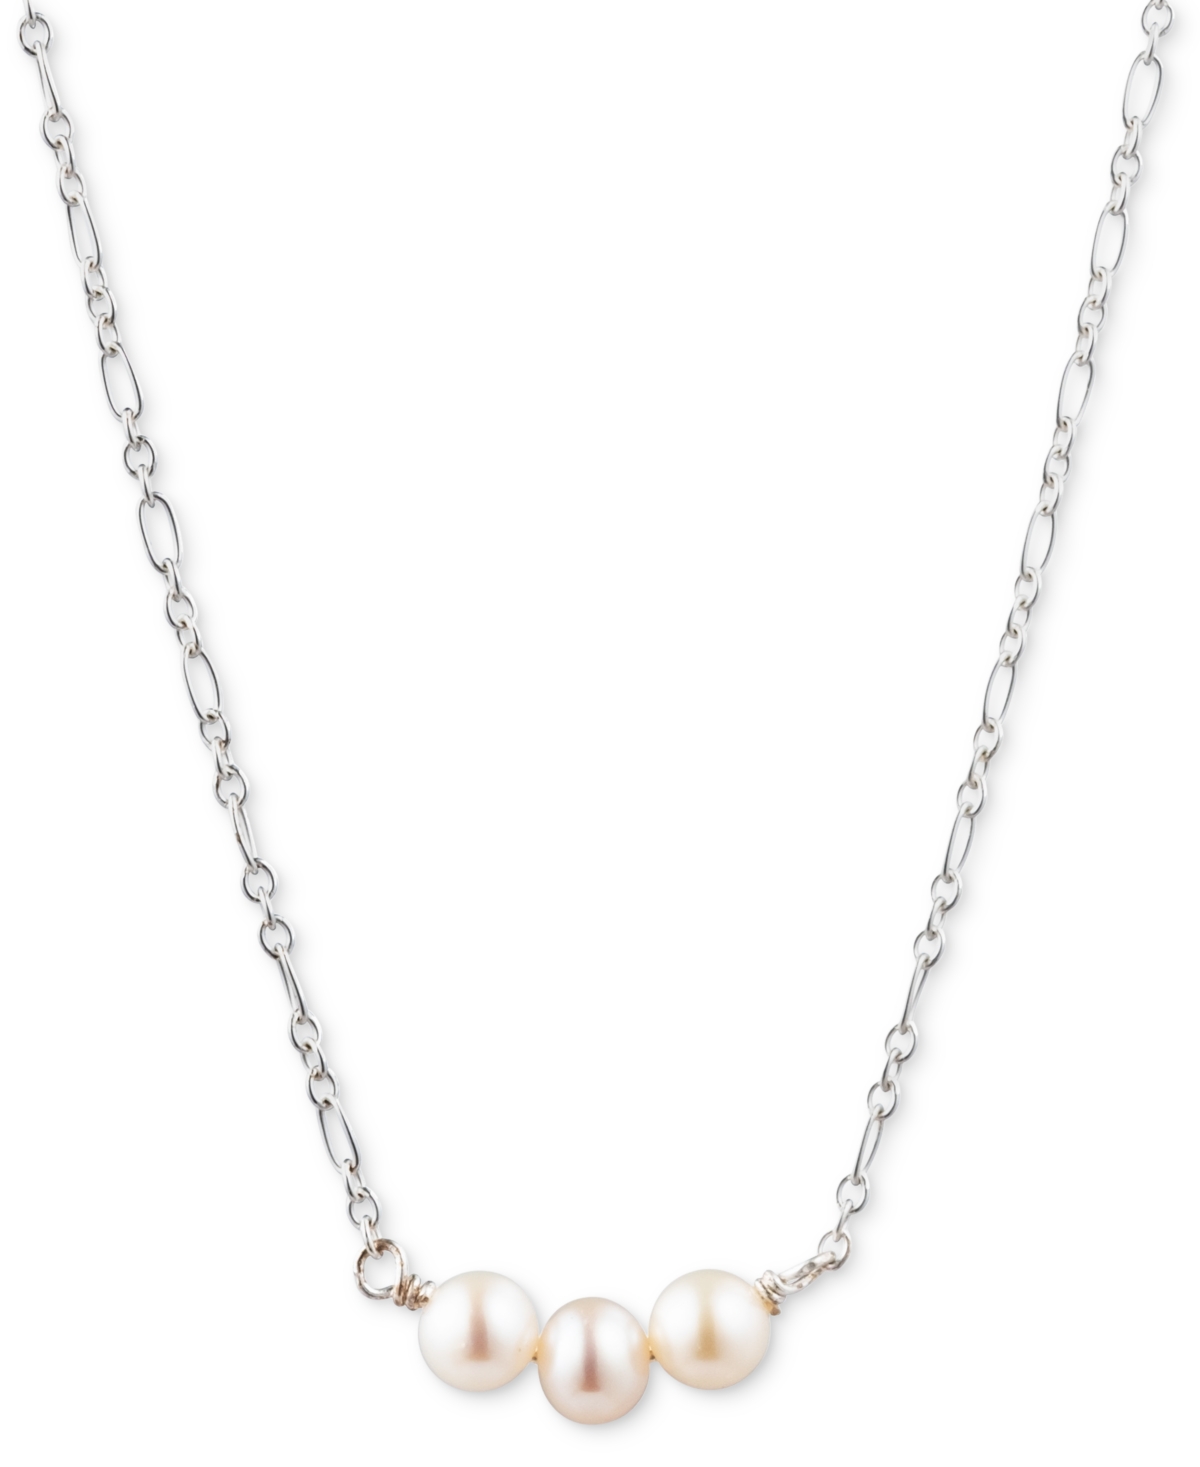 Lauren Ralph Lauren Sterling Silver Genuine Freshwater Pearl Statement Necklace, 18"+ 3" extender - White